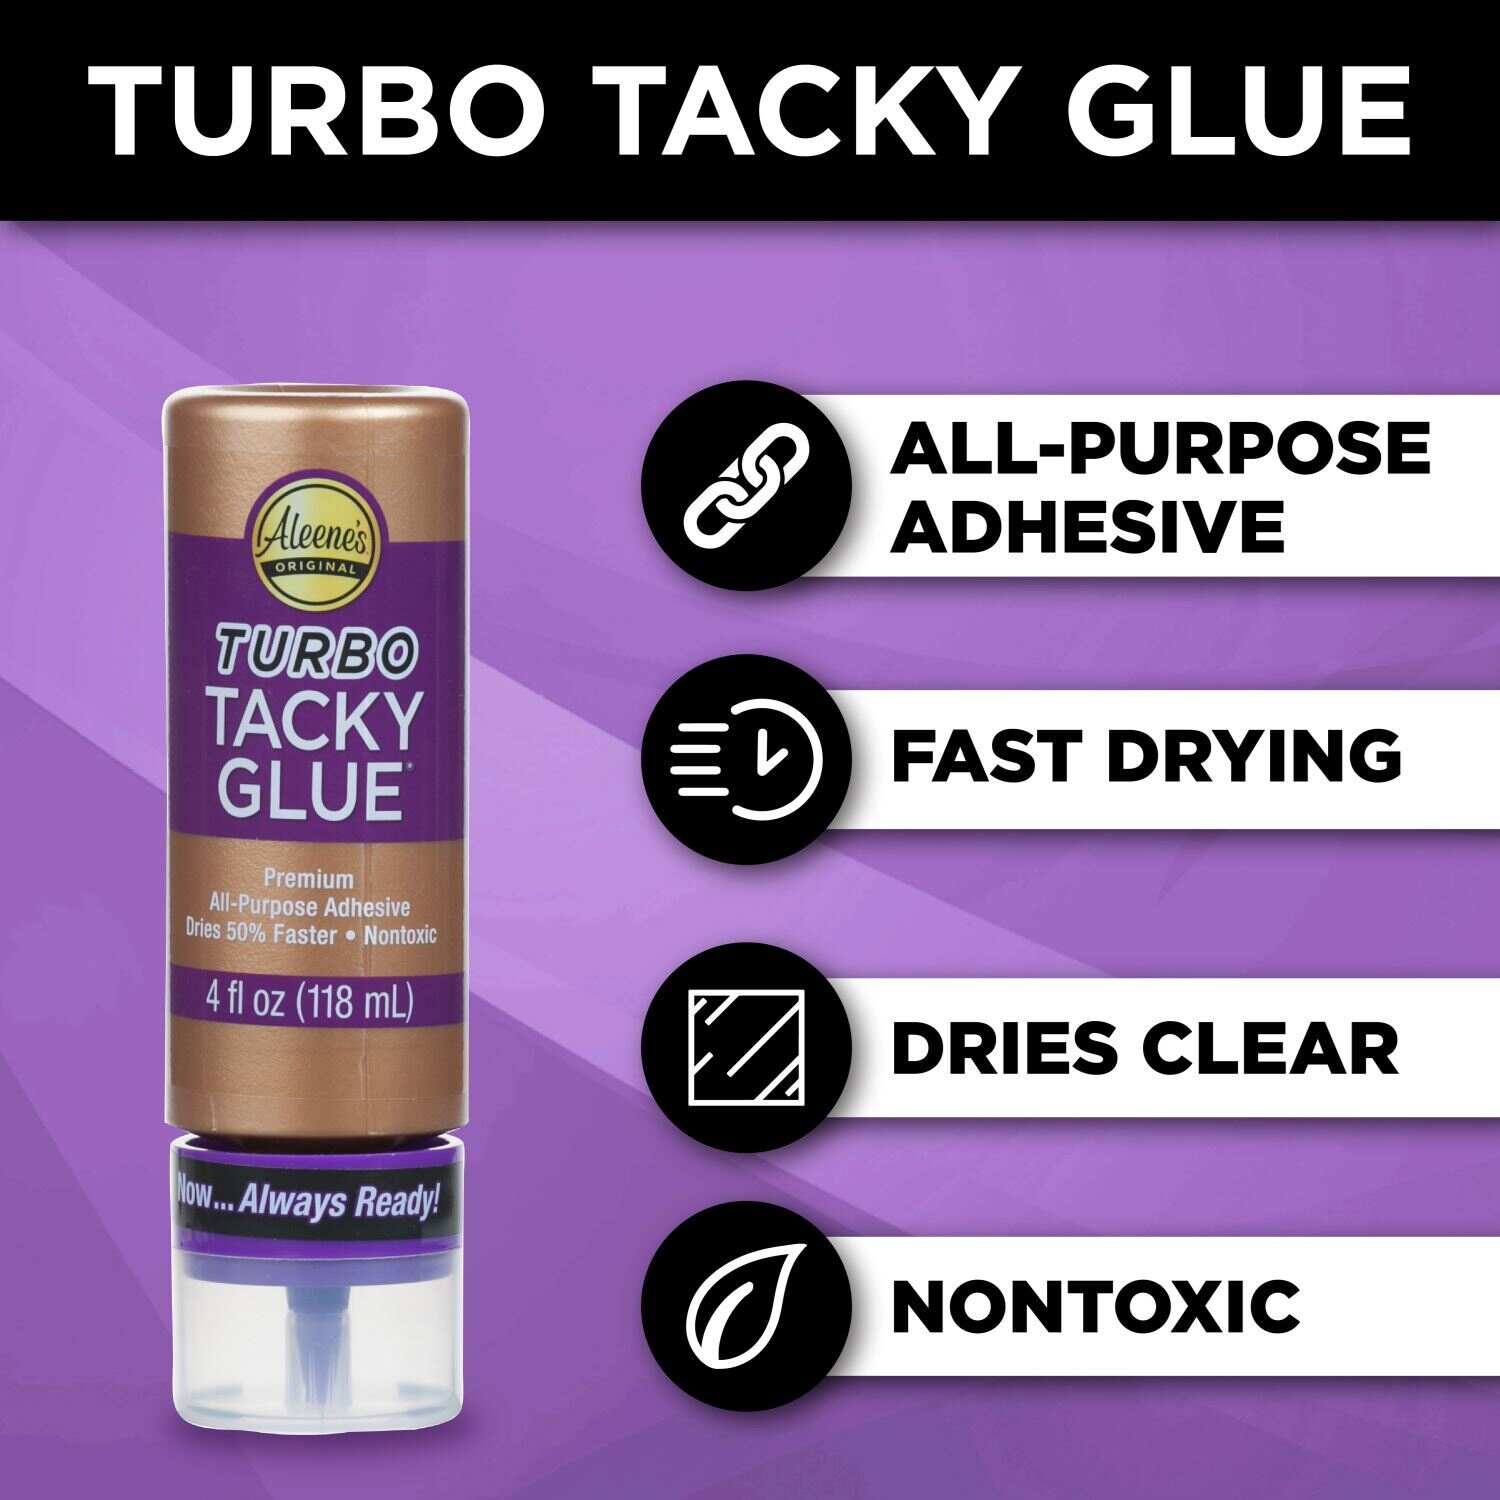 Aleene's Turbo Tacky Glue Needlenose Tip 2oz